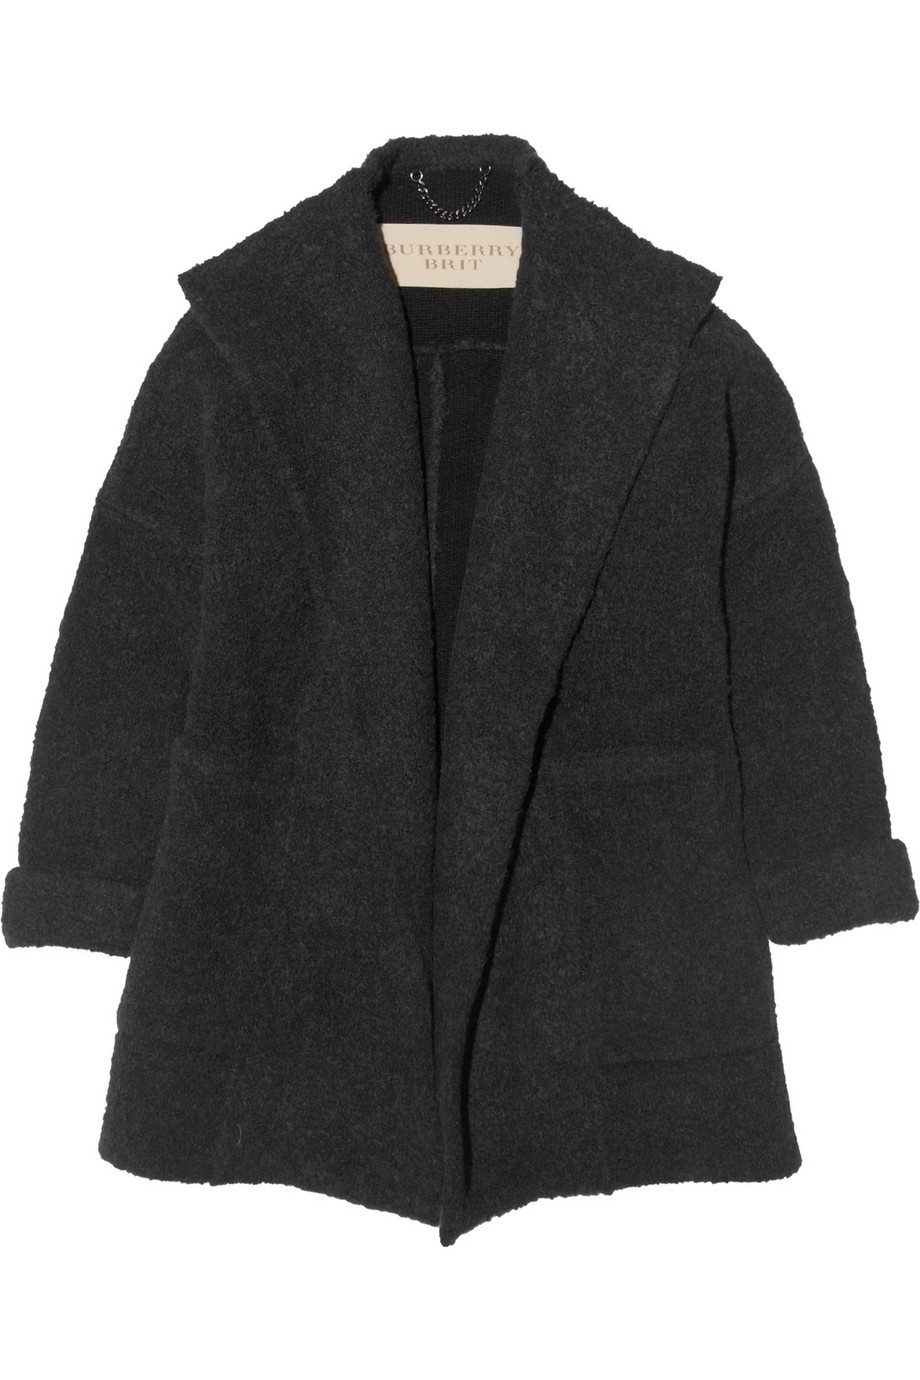 Lyst - Burberry Brit Wool-Blend Jacket in Black